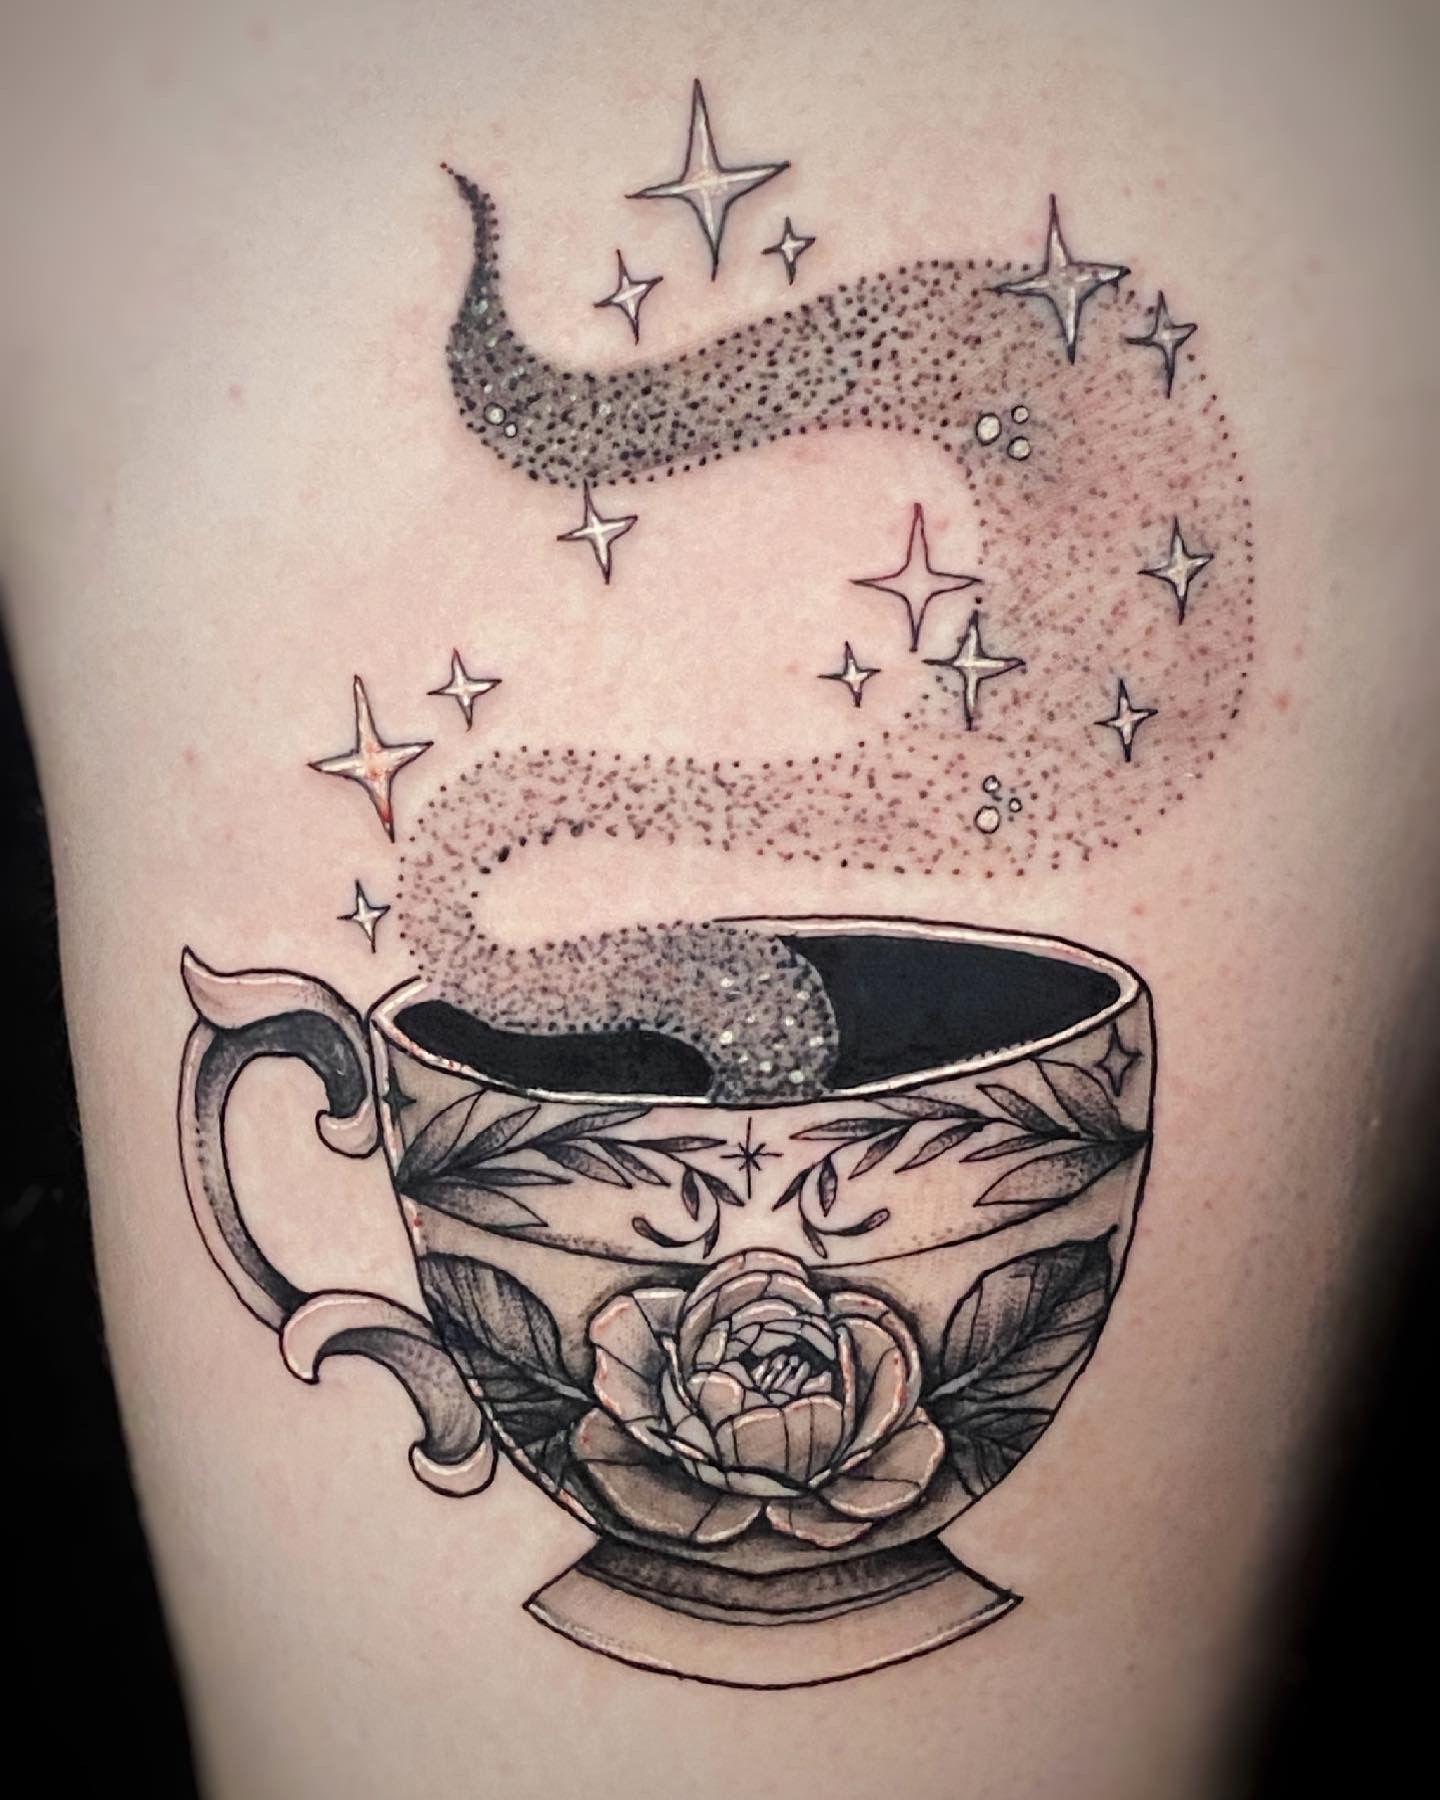 Temporary Tattoo Dainty Heart Cup and Saucer Swirls / Tea Cup Tattoo /  Coffee Cup Tattoo / Pretty Food and Drink Tattoo / Small Wrist Tattoo - Etsy